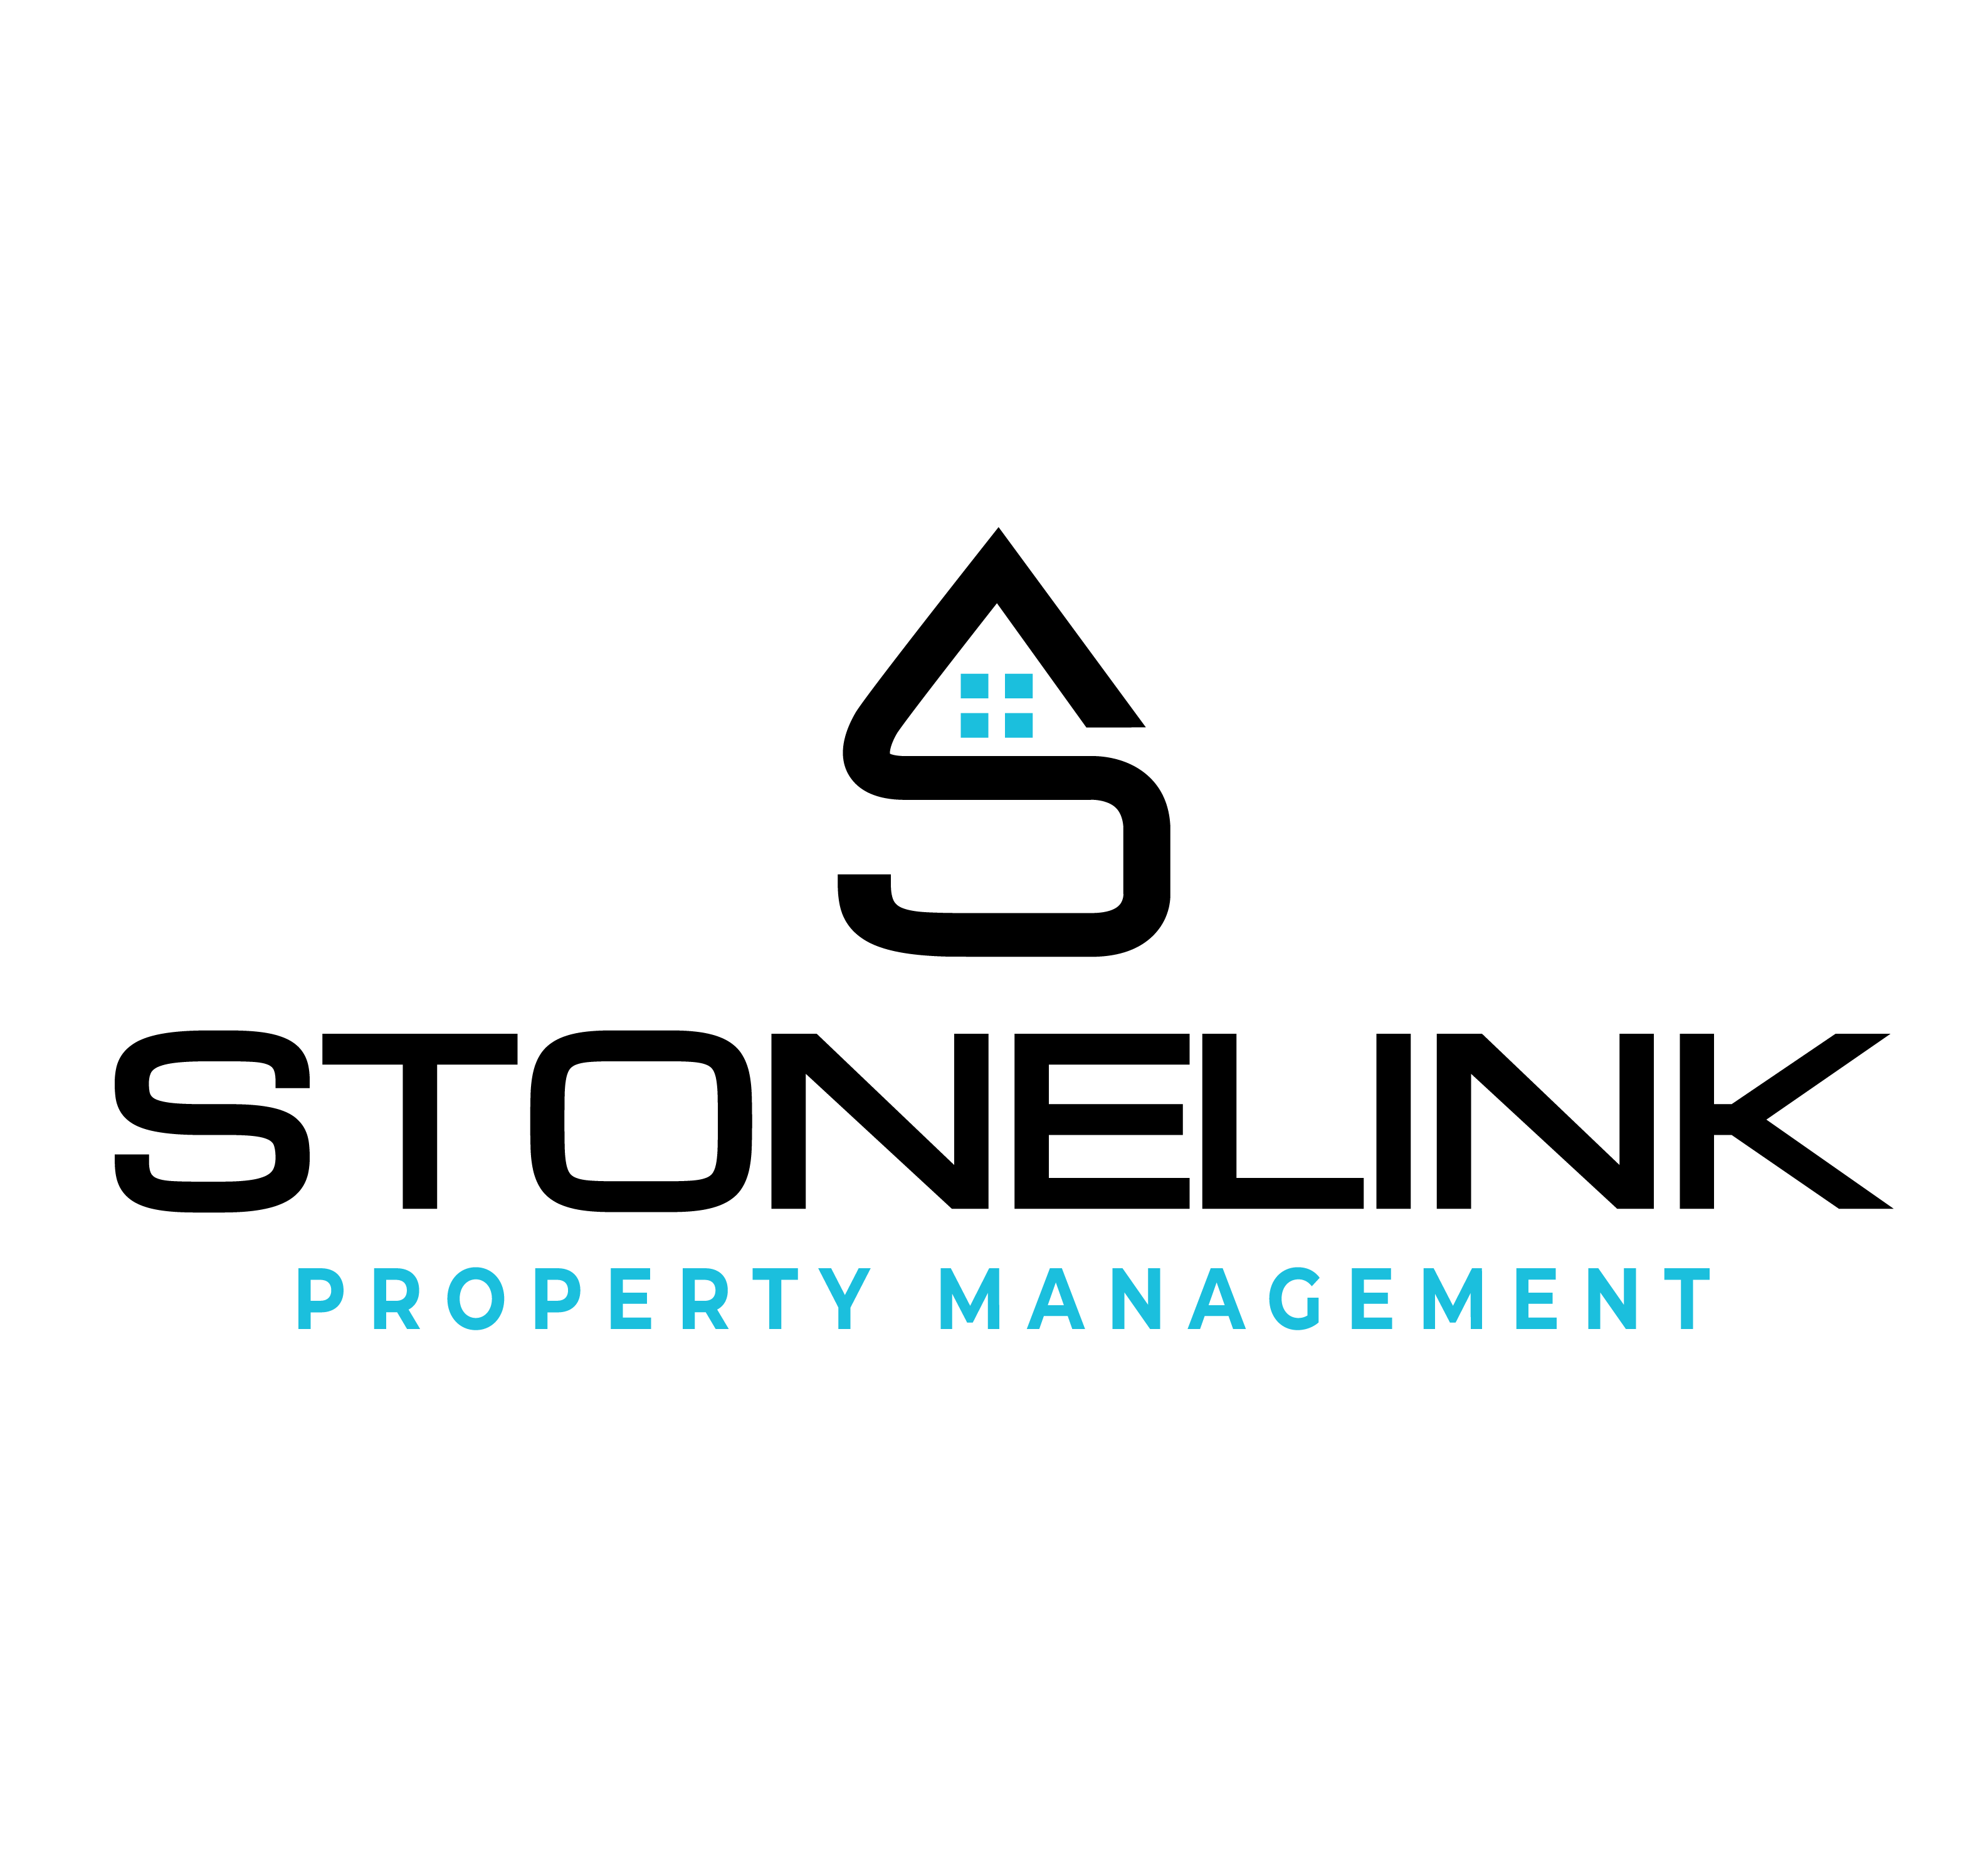 Stonelink Property Management